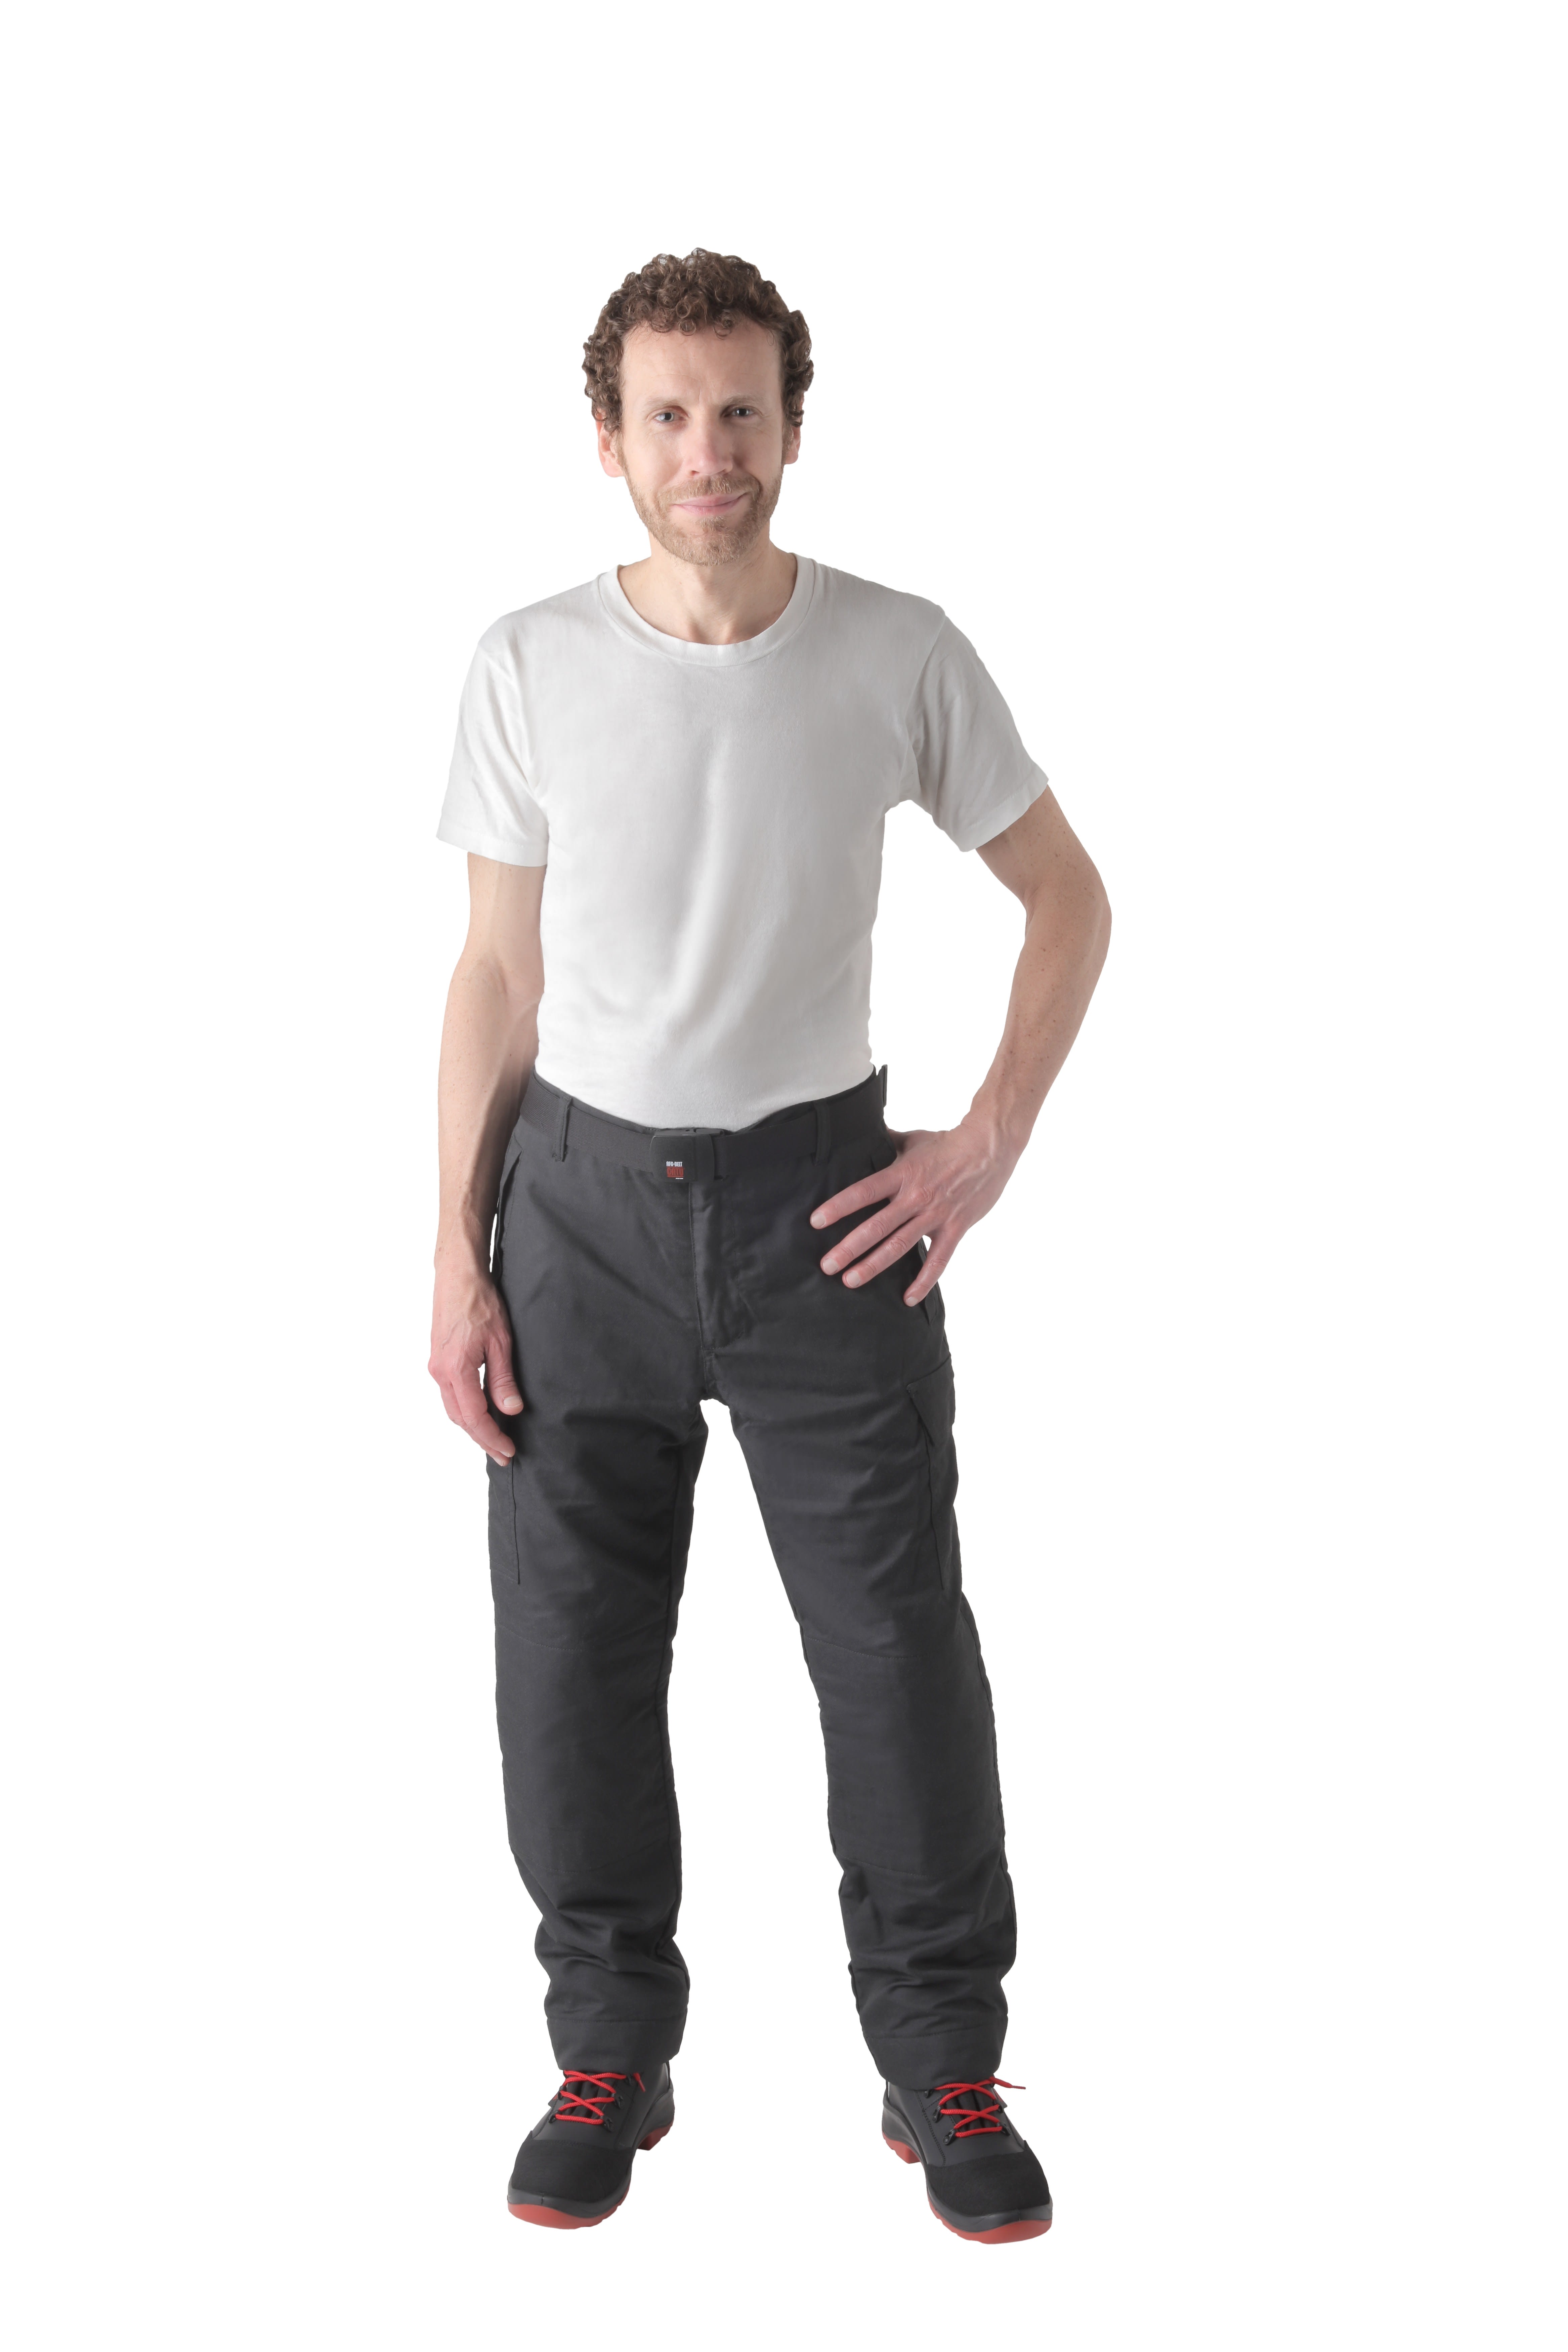 Catu - pantalon 25-40 cal-cm2 noir non feu soudure AS-xl